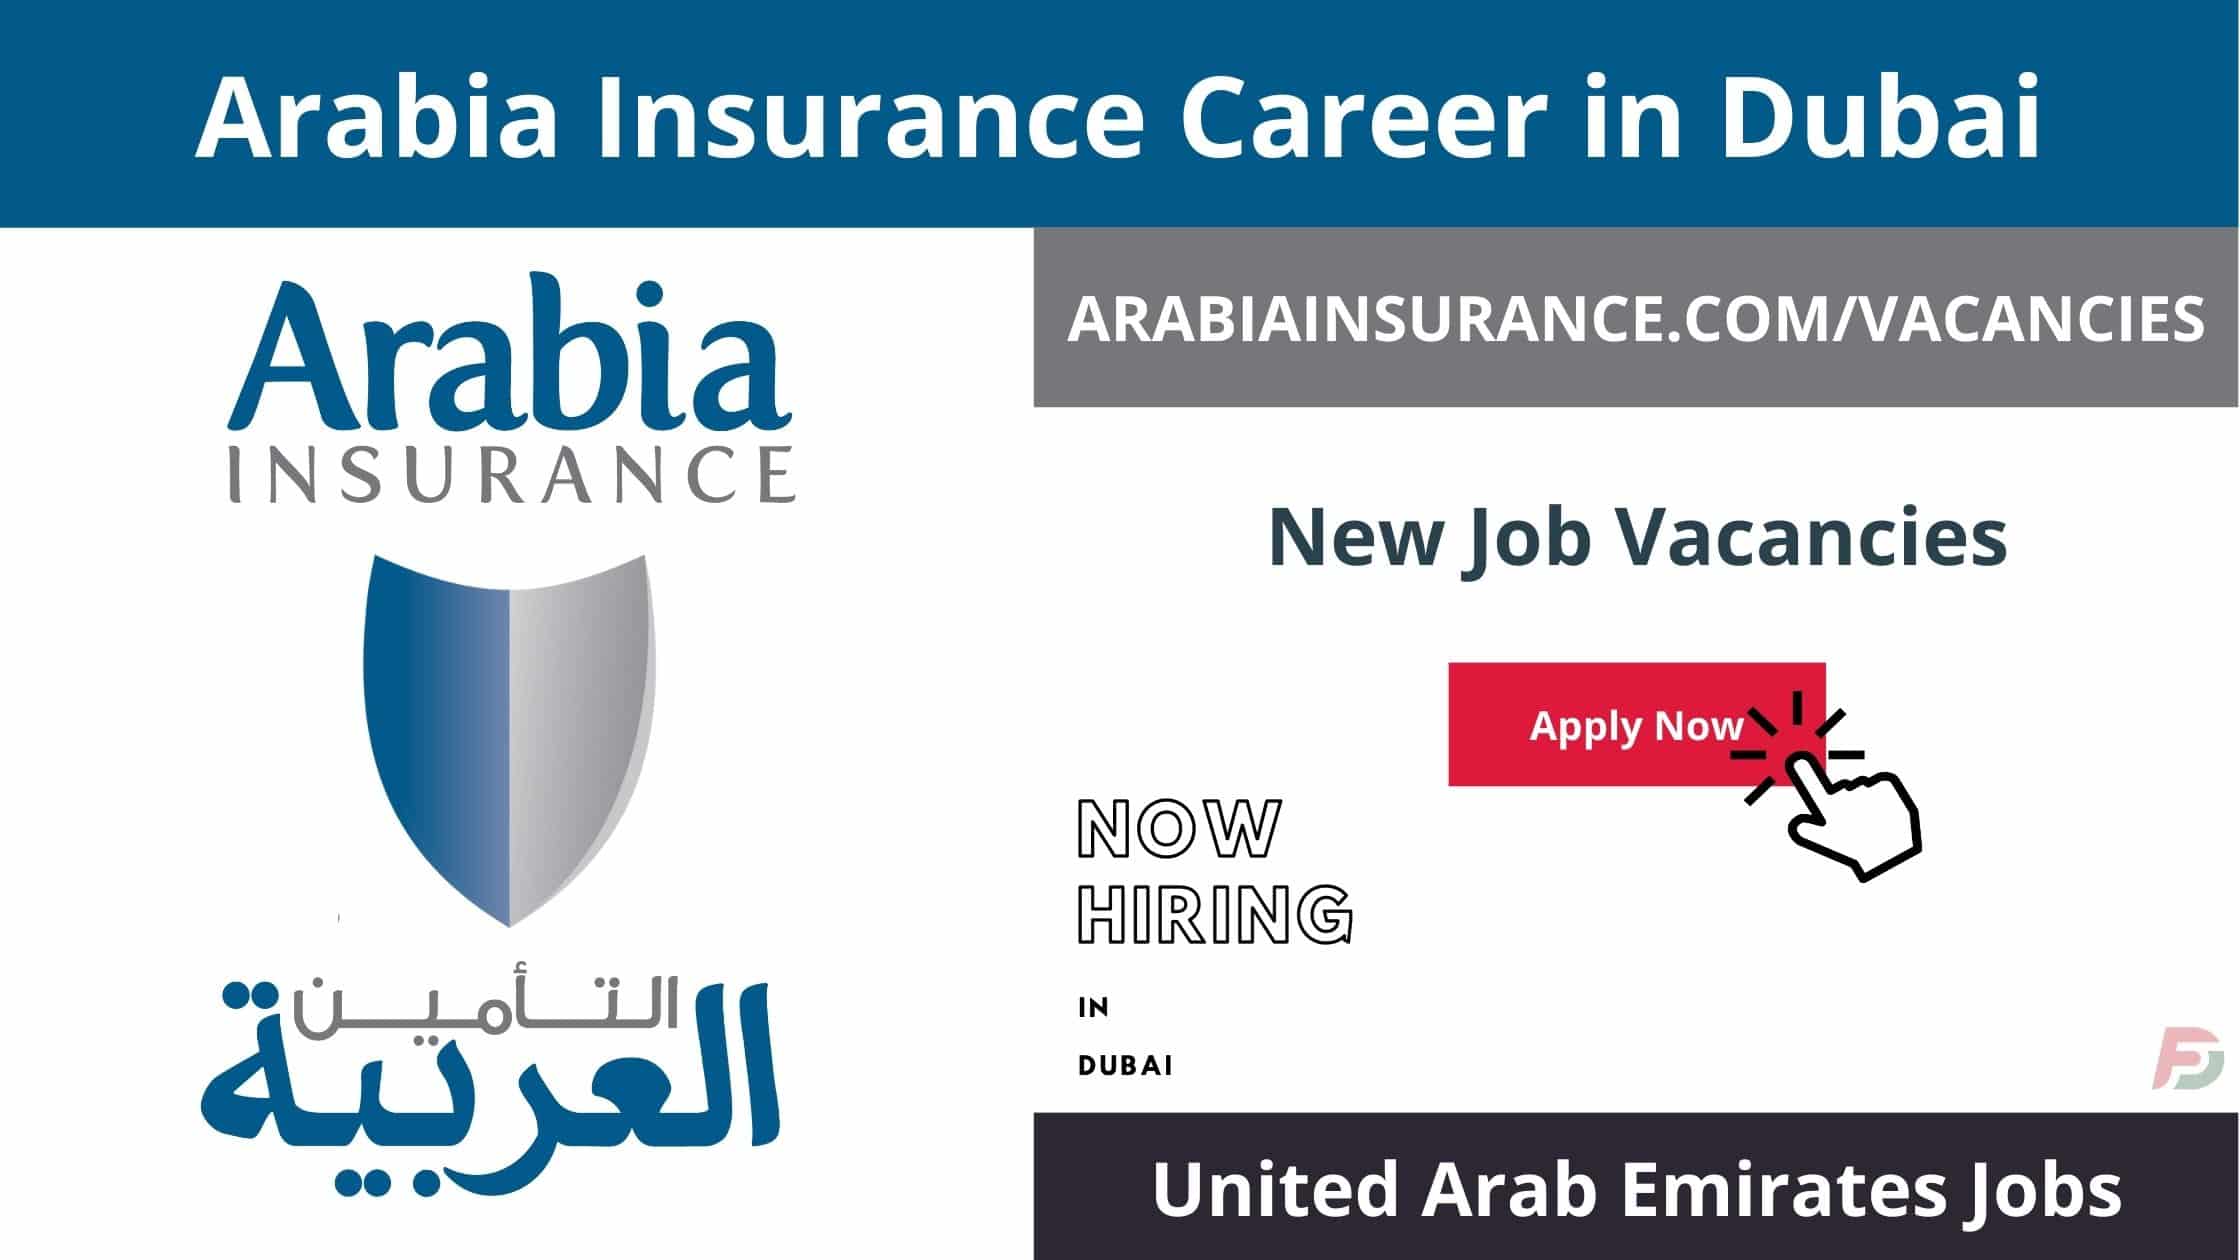 Arabia Insurance Career in Dubai